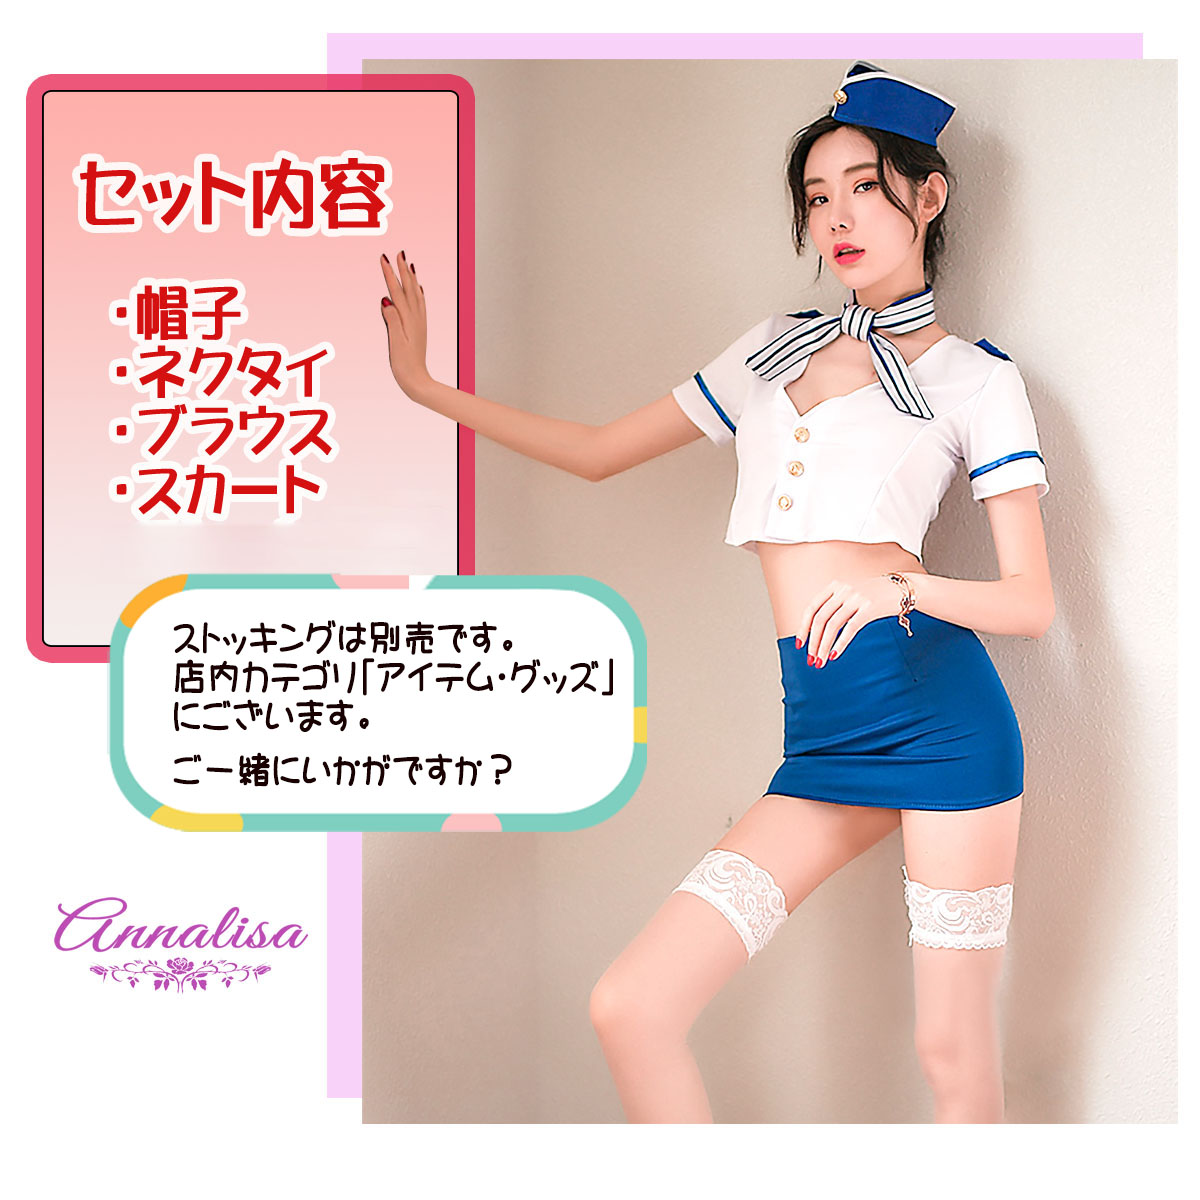 schuwa-tes cosplay net tights attaching pichiCA cabin attendant schi- Halloween stretch costume set sexy eroero.. uniform 